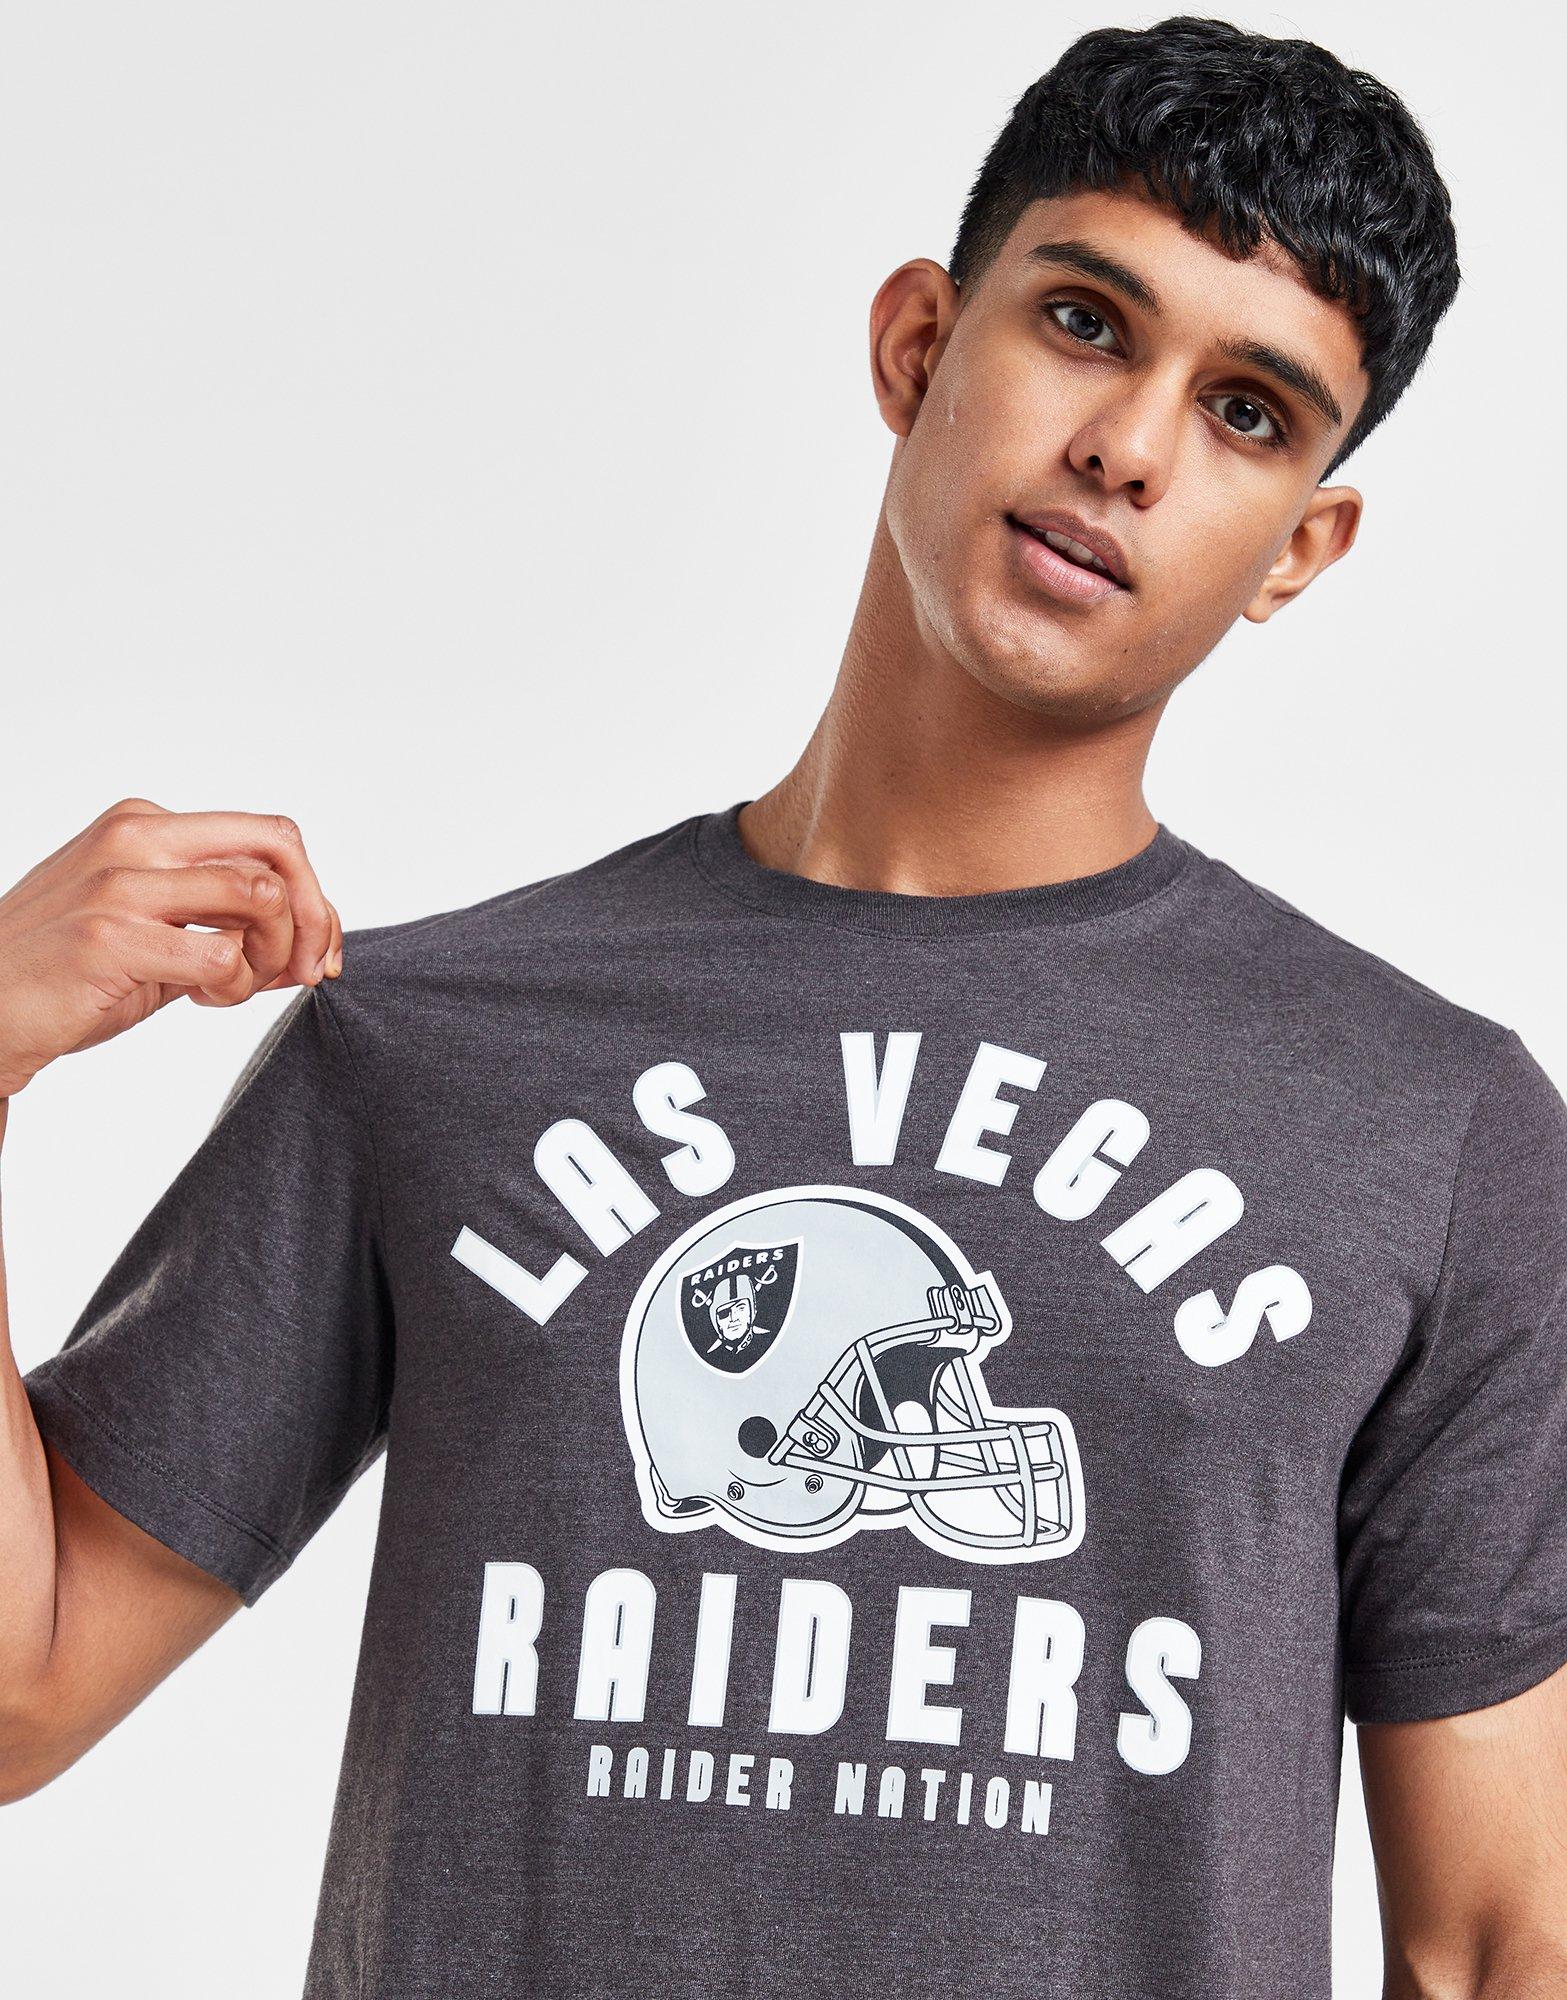 Official Las Vegas Raiders Sleepwear, Raiders Underwear, Pajamas